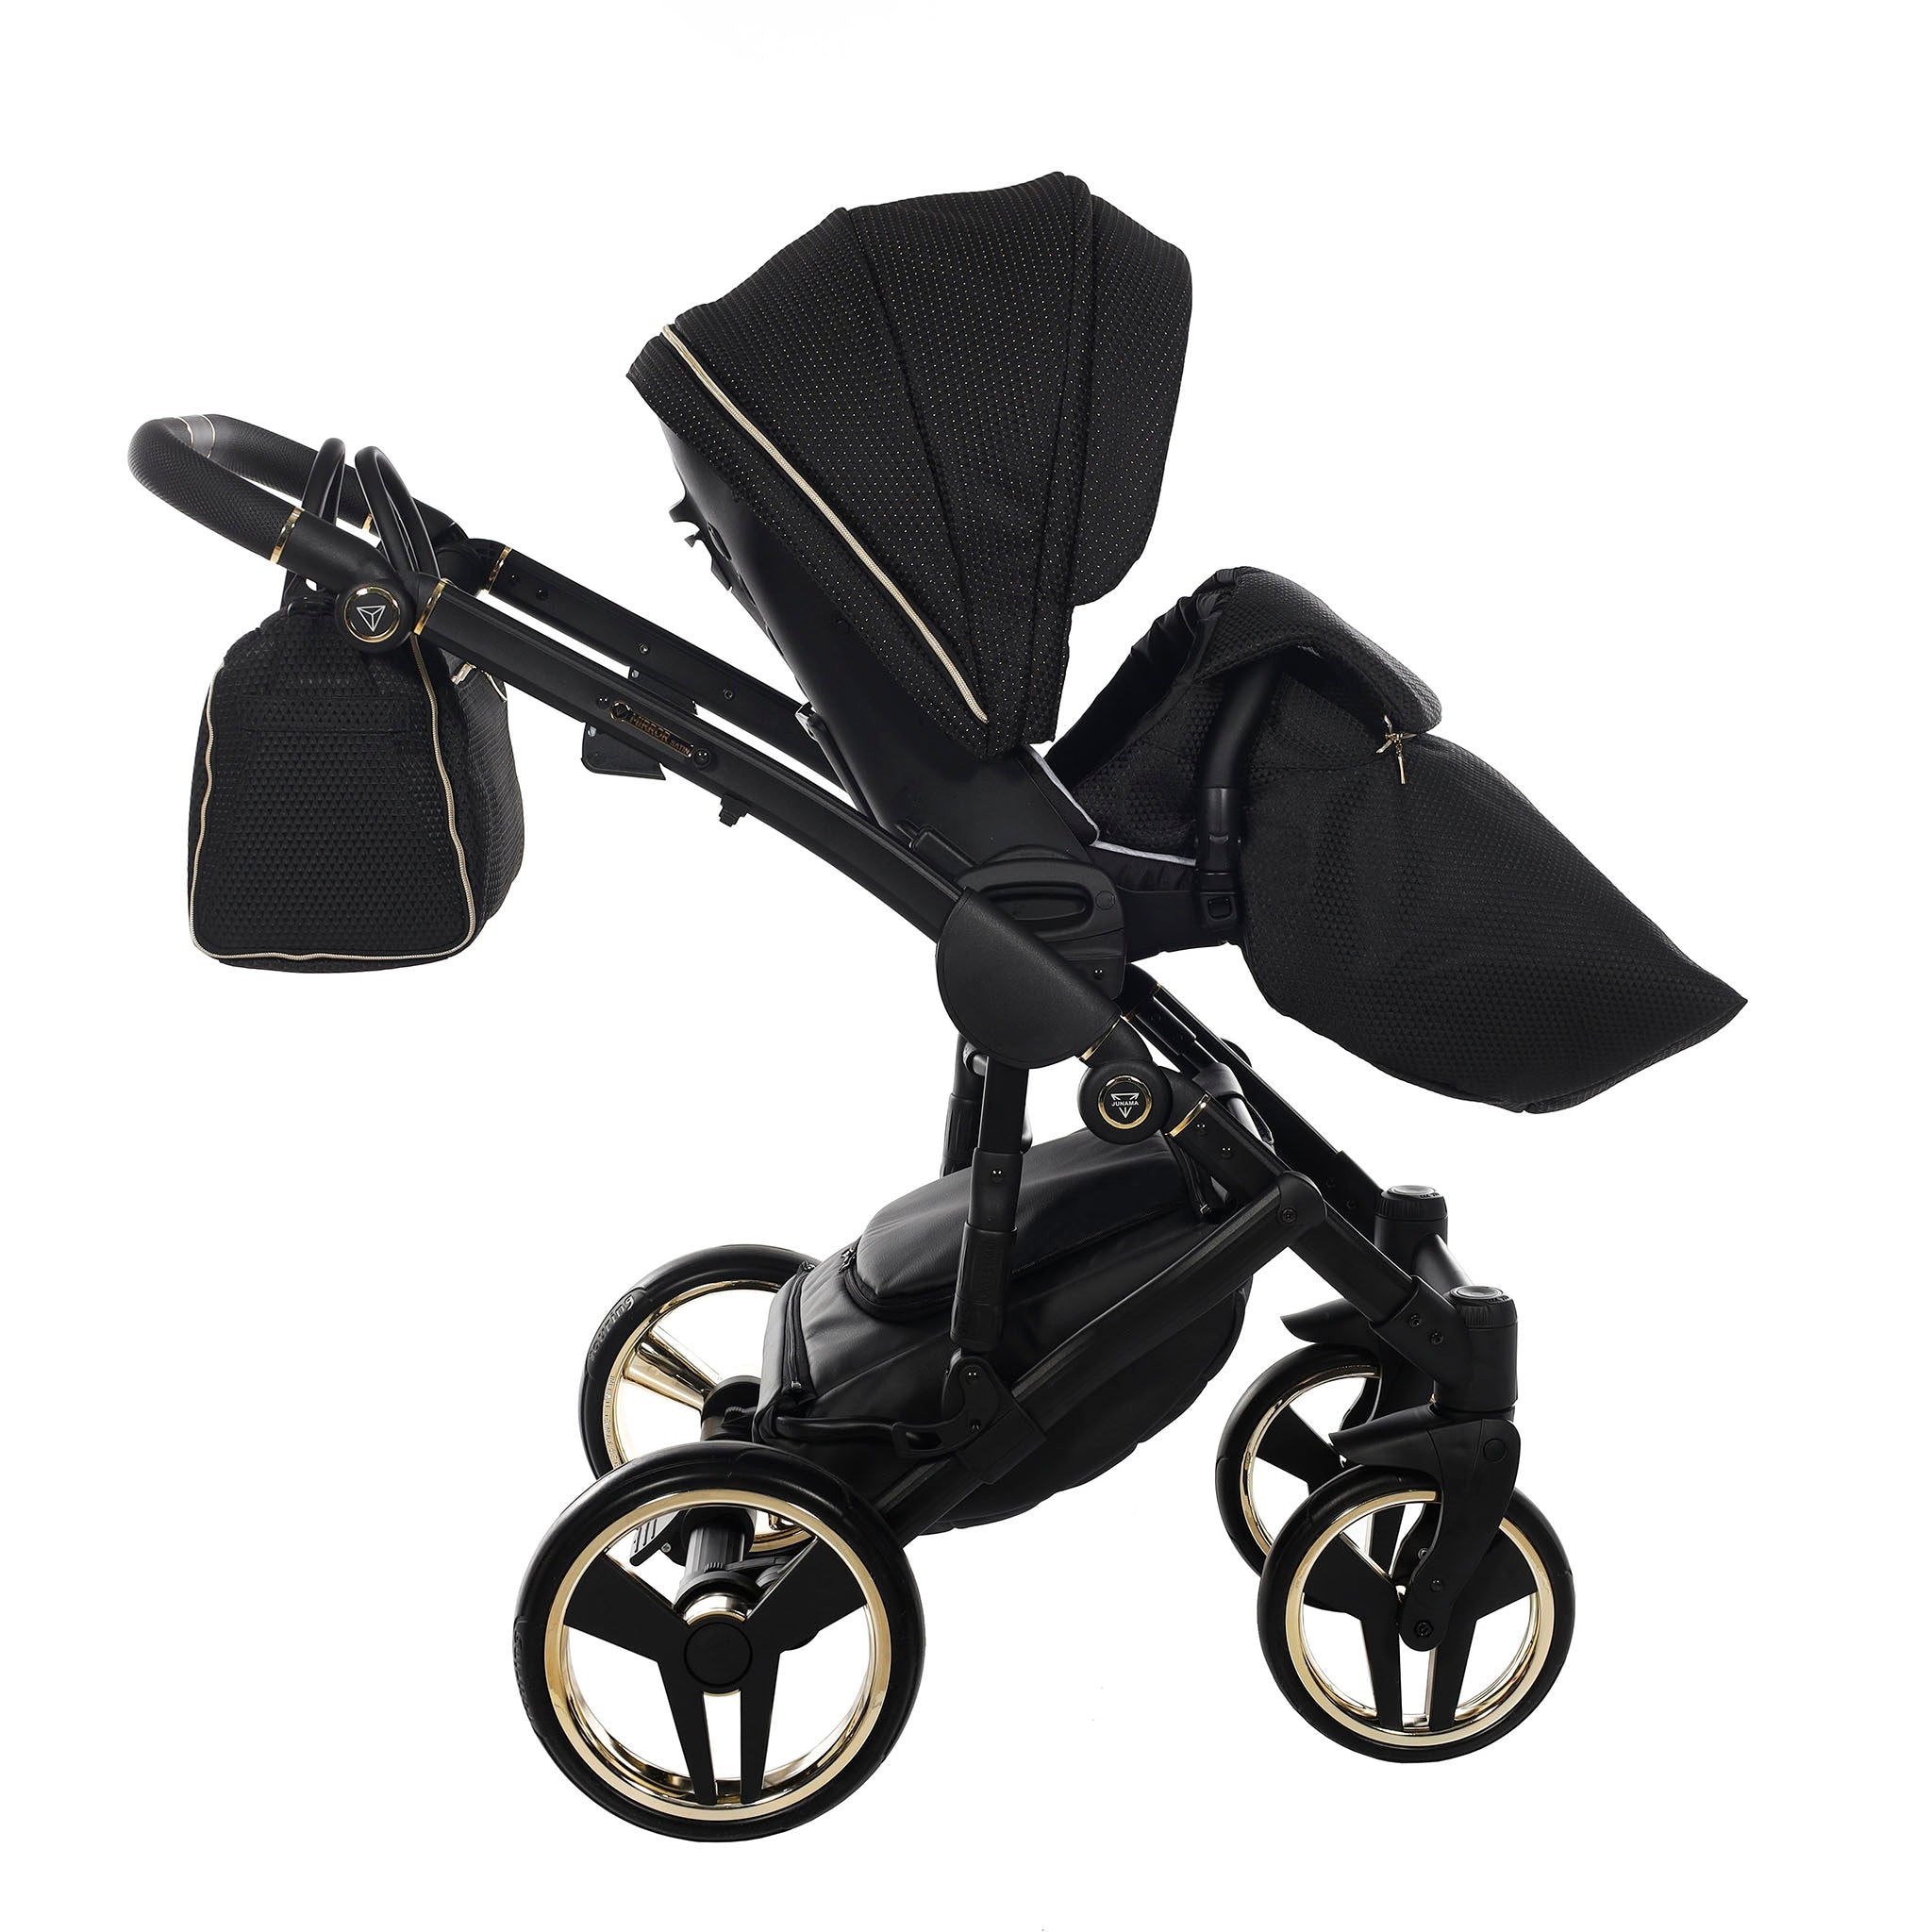 Junama Mirror Satin, baby prams or stroller 2 in 1 - Gold and Black, Code number: JUNMSAT03